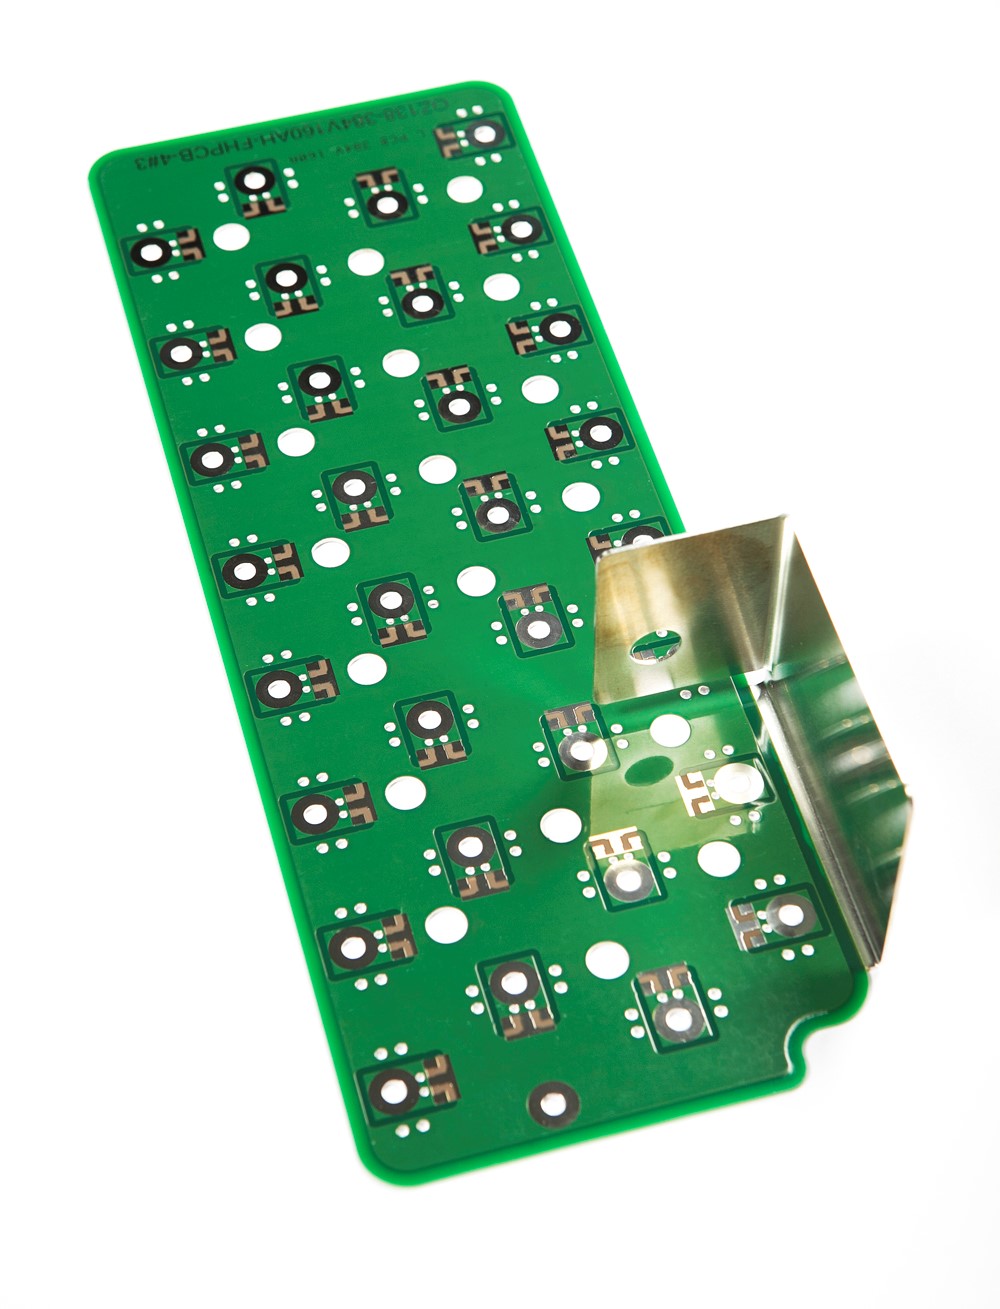 circuit board manufacturers 